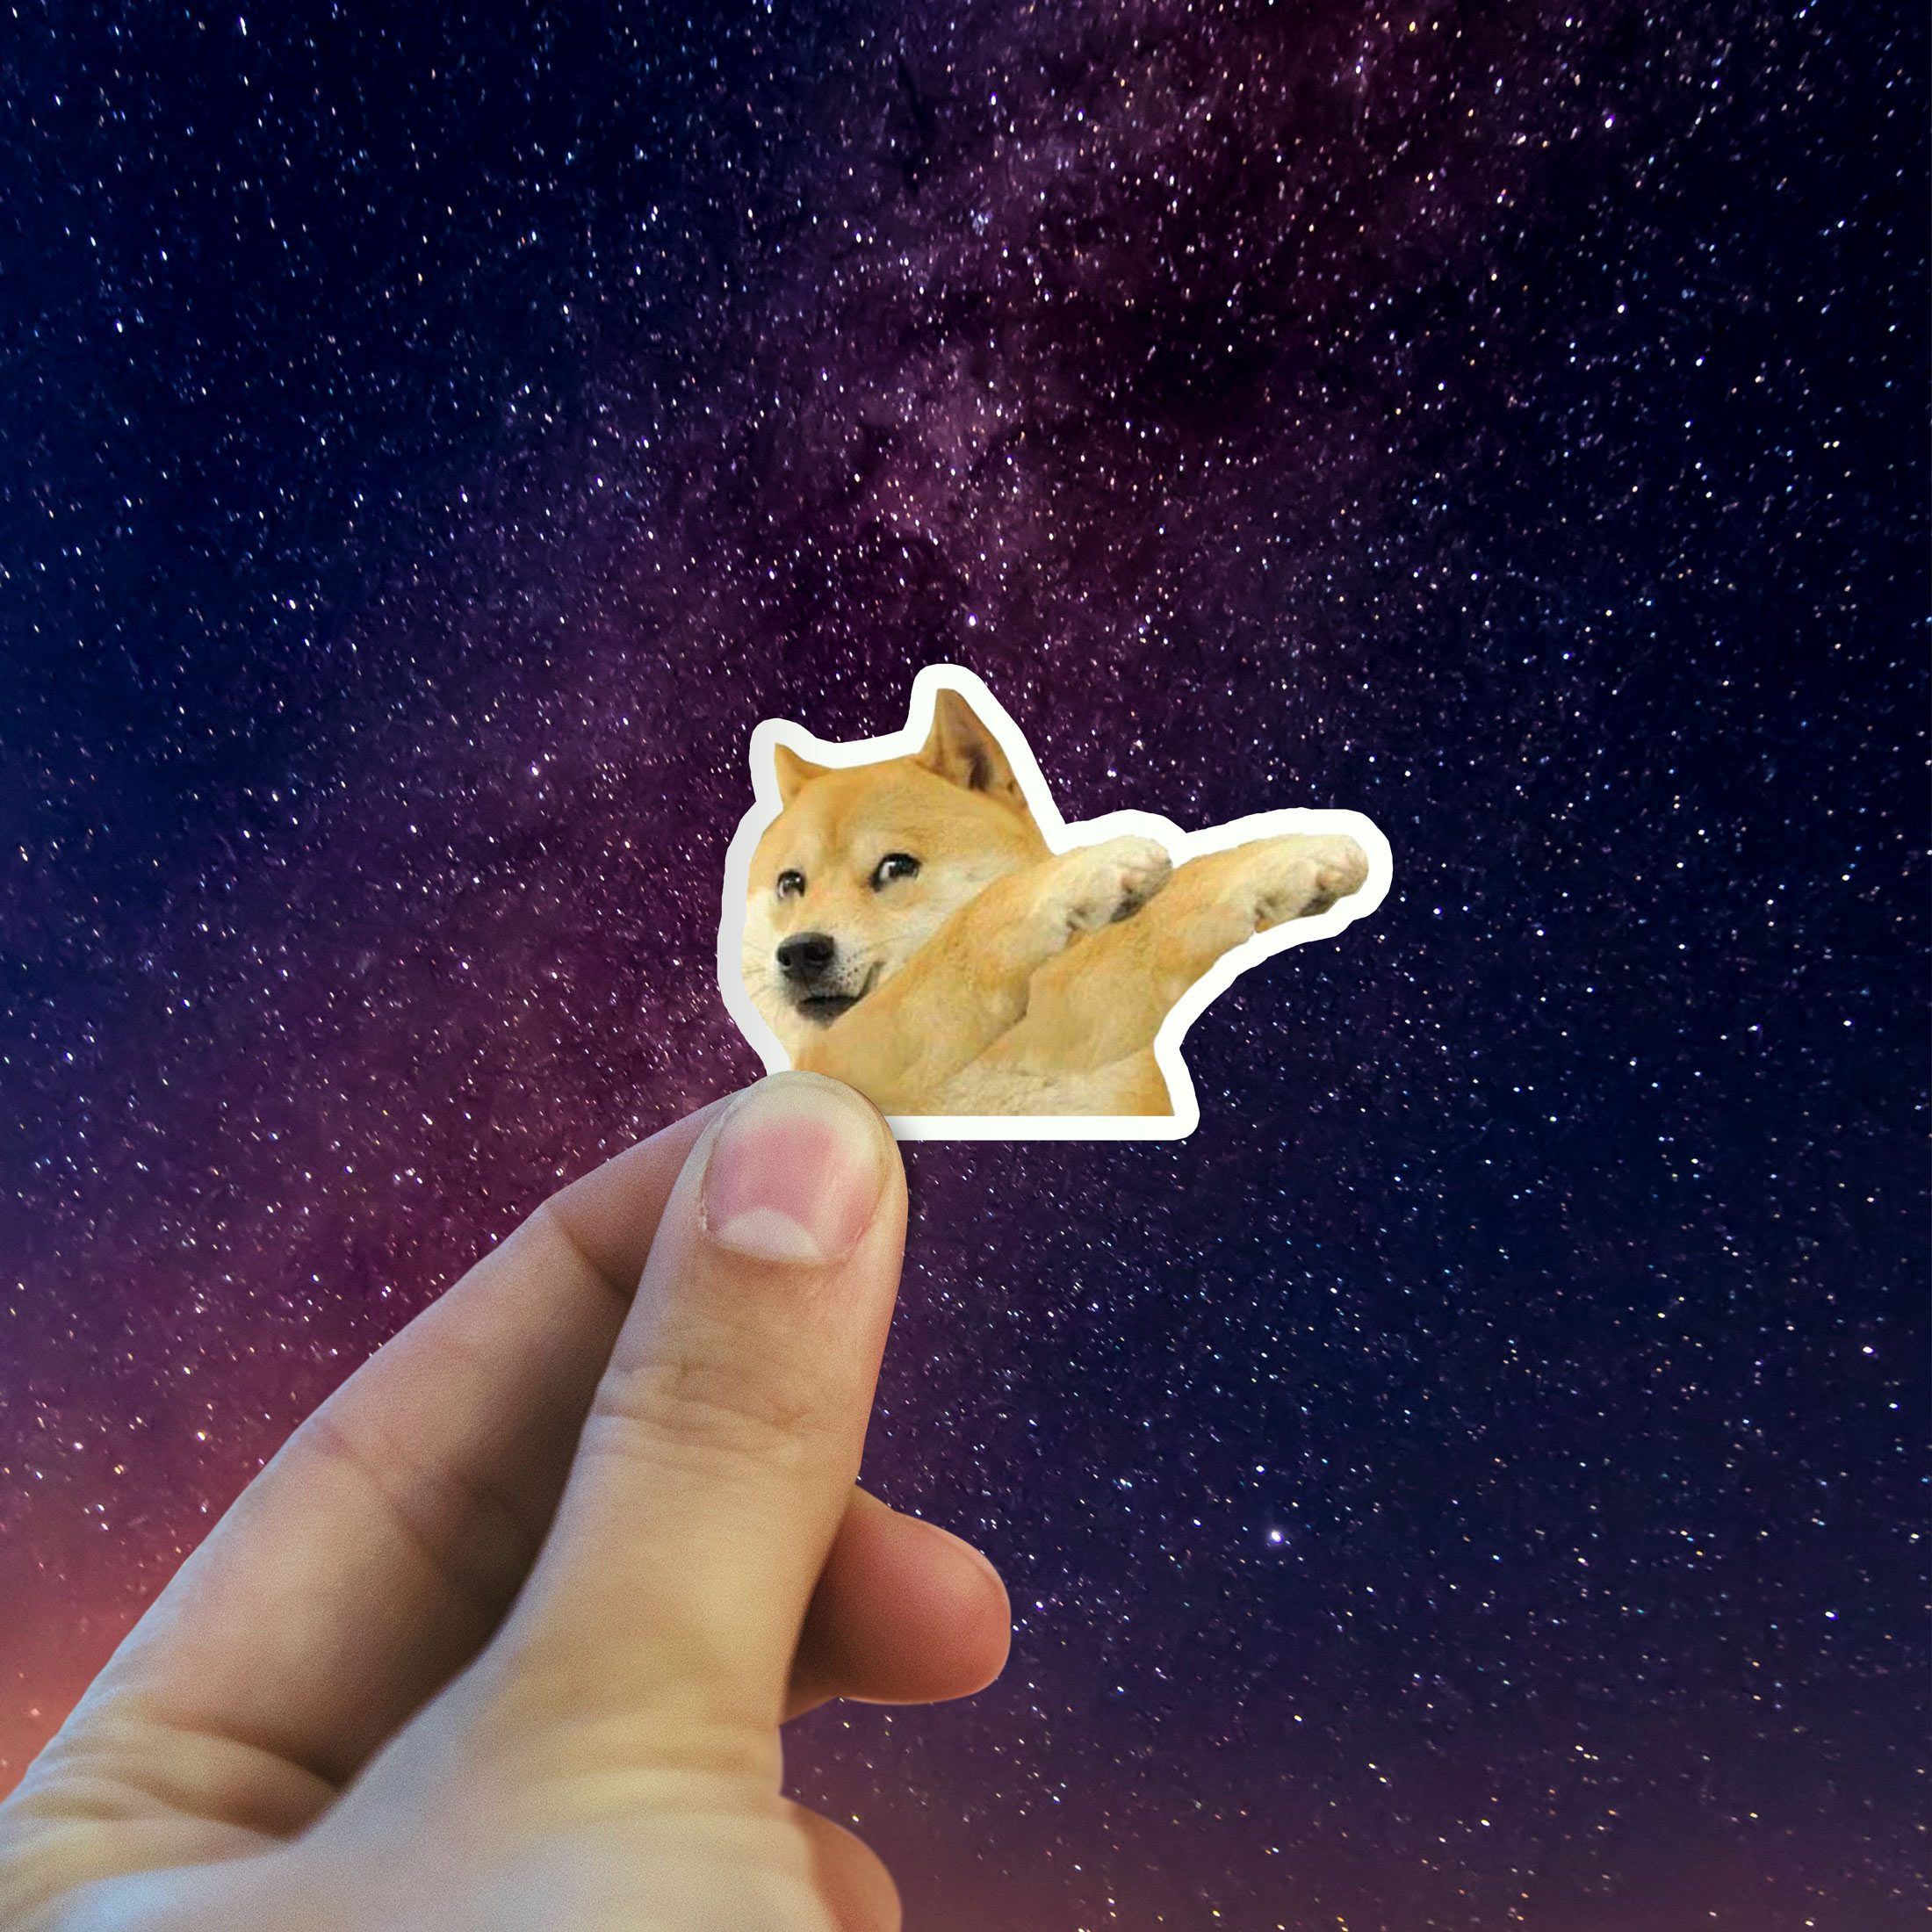 Doge Dabbing Dogecoin dabbing sticker holding in hand